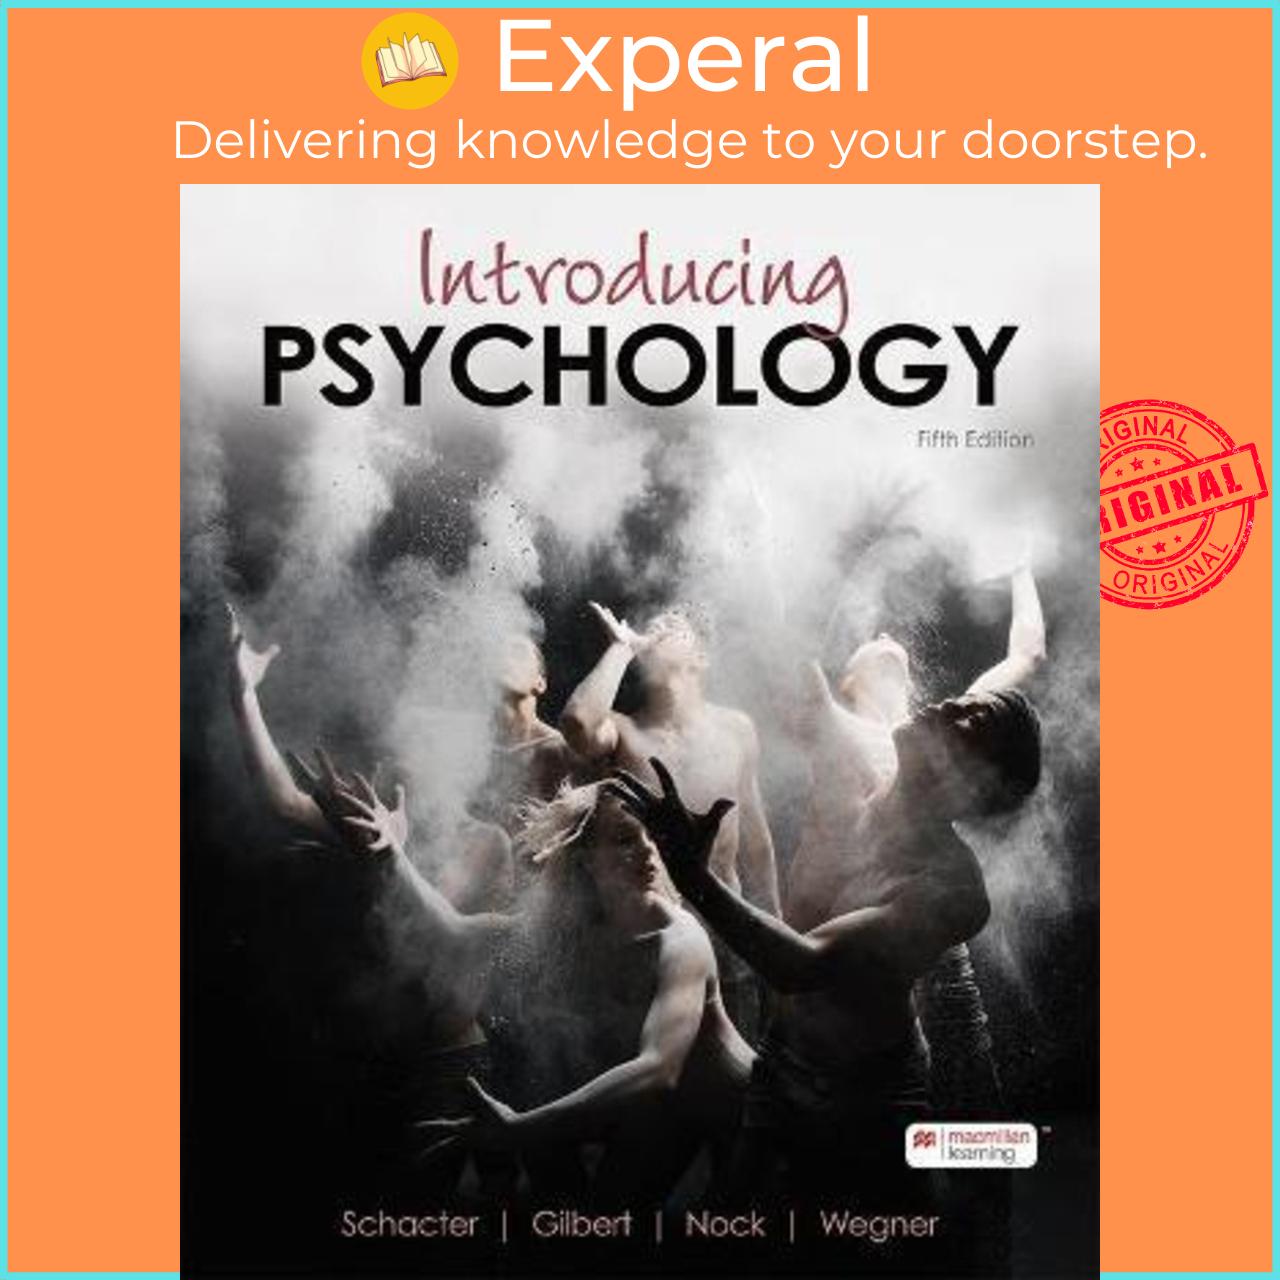 Hình ảnh Sách - Introducing Psychology by Daniel L. Schacter (US edition, paperback)